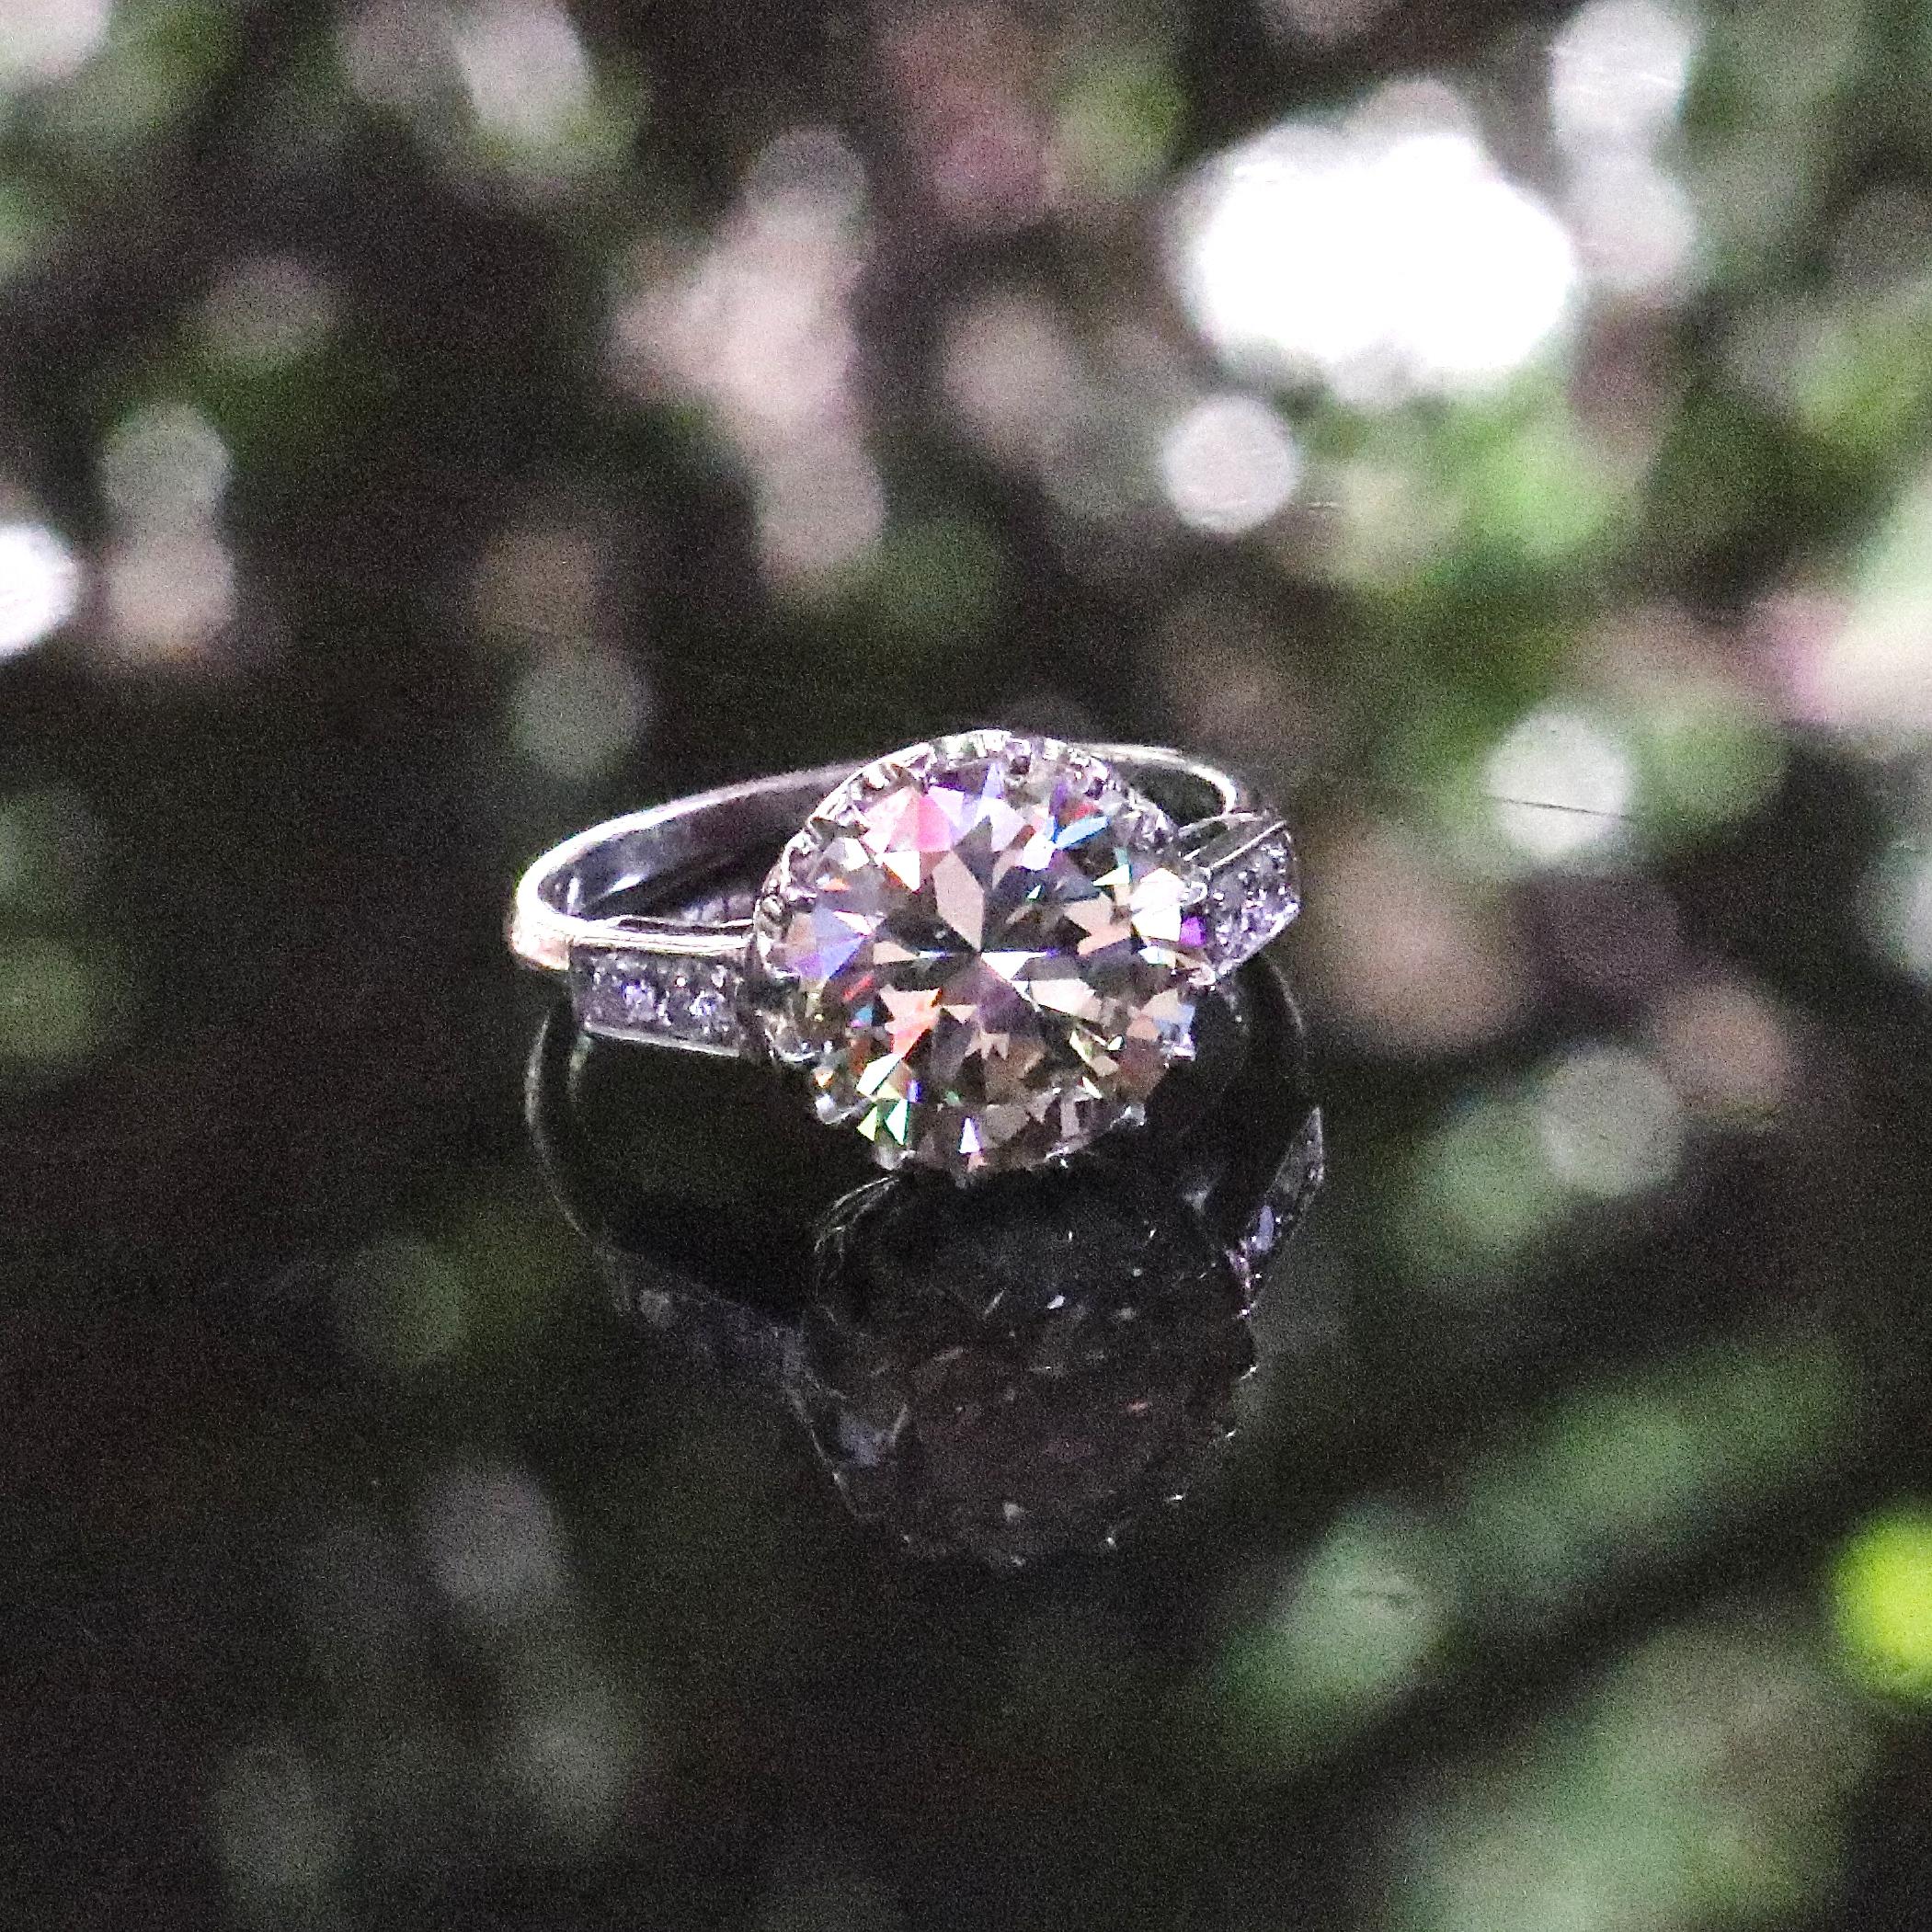 Contemporary Vintage 3.67 Carat Diamond Platinum Engagement Ring